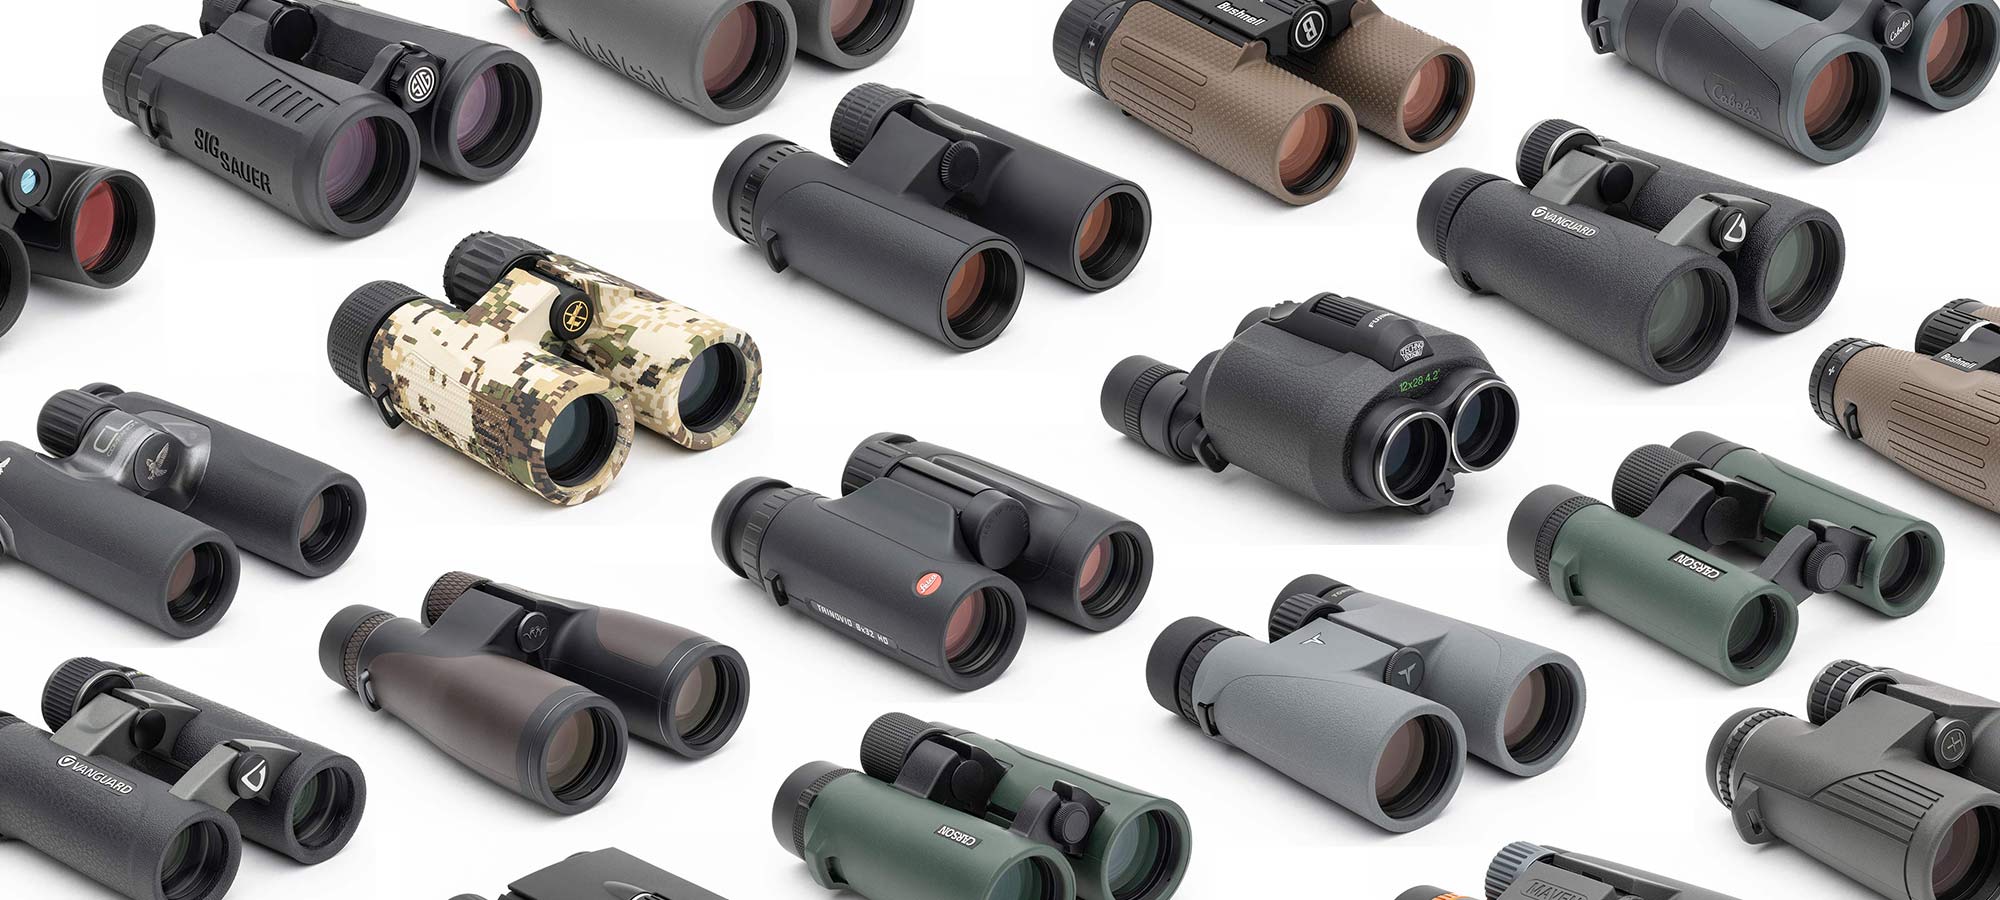 2018 best binoculars for hunting